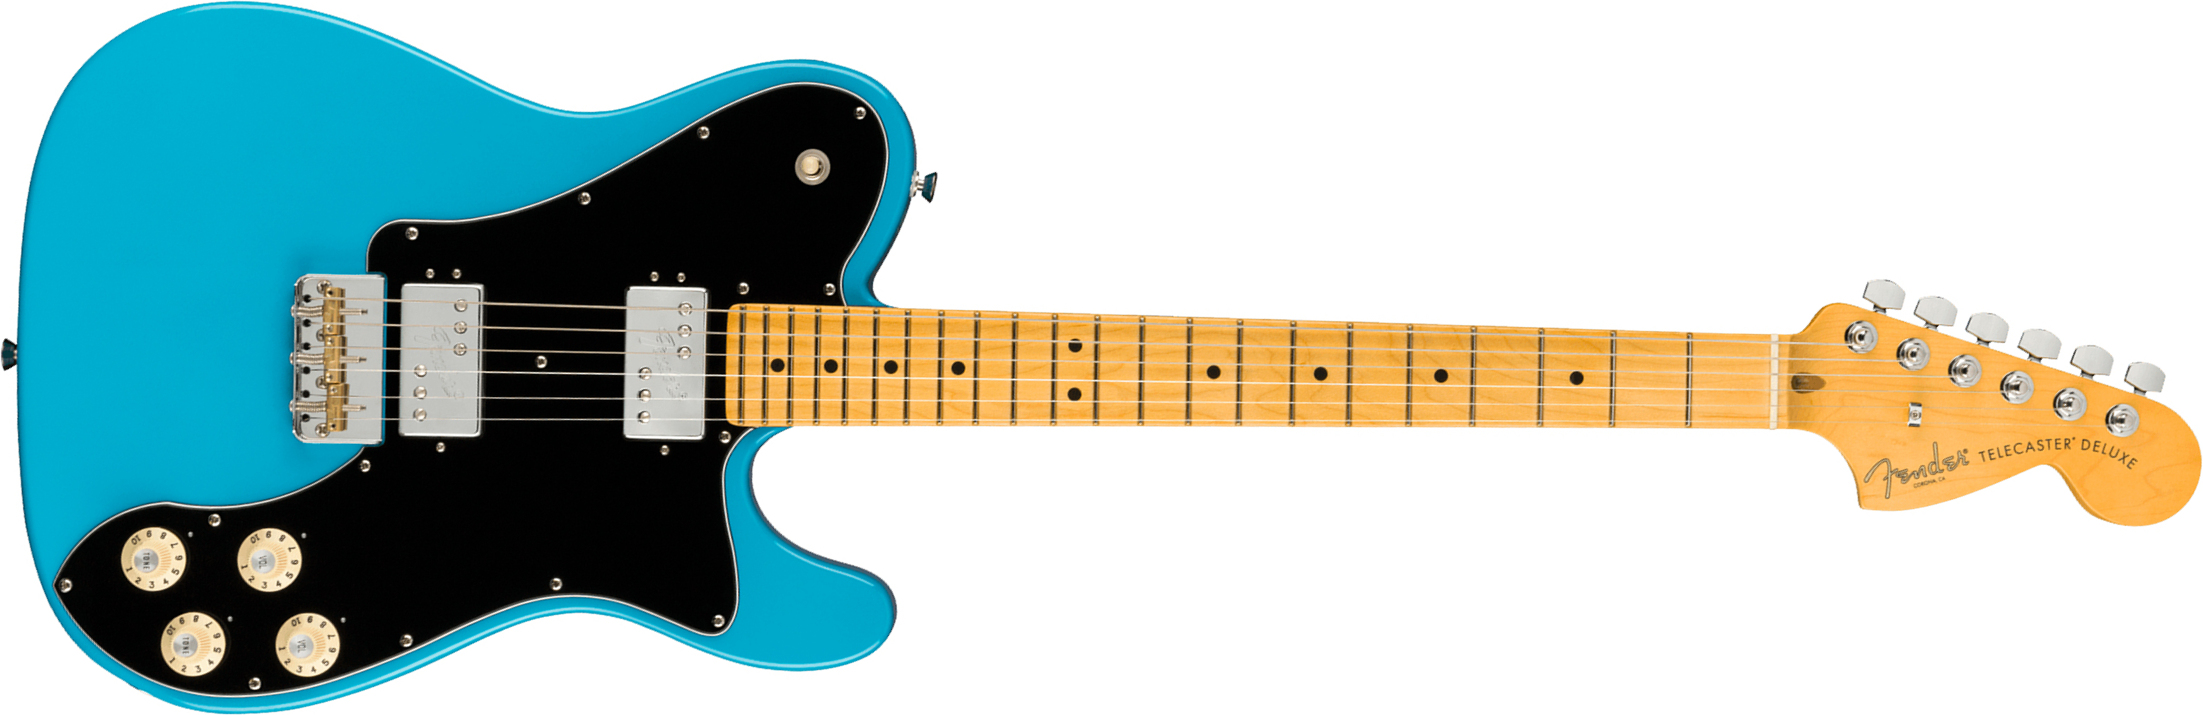 Fender Tele Deluxe American Professional Ii Usa Mn - Miami Blue - Televorm elektrische gitaar - Main picture